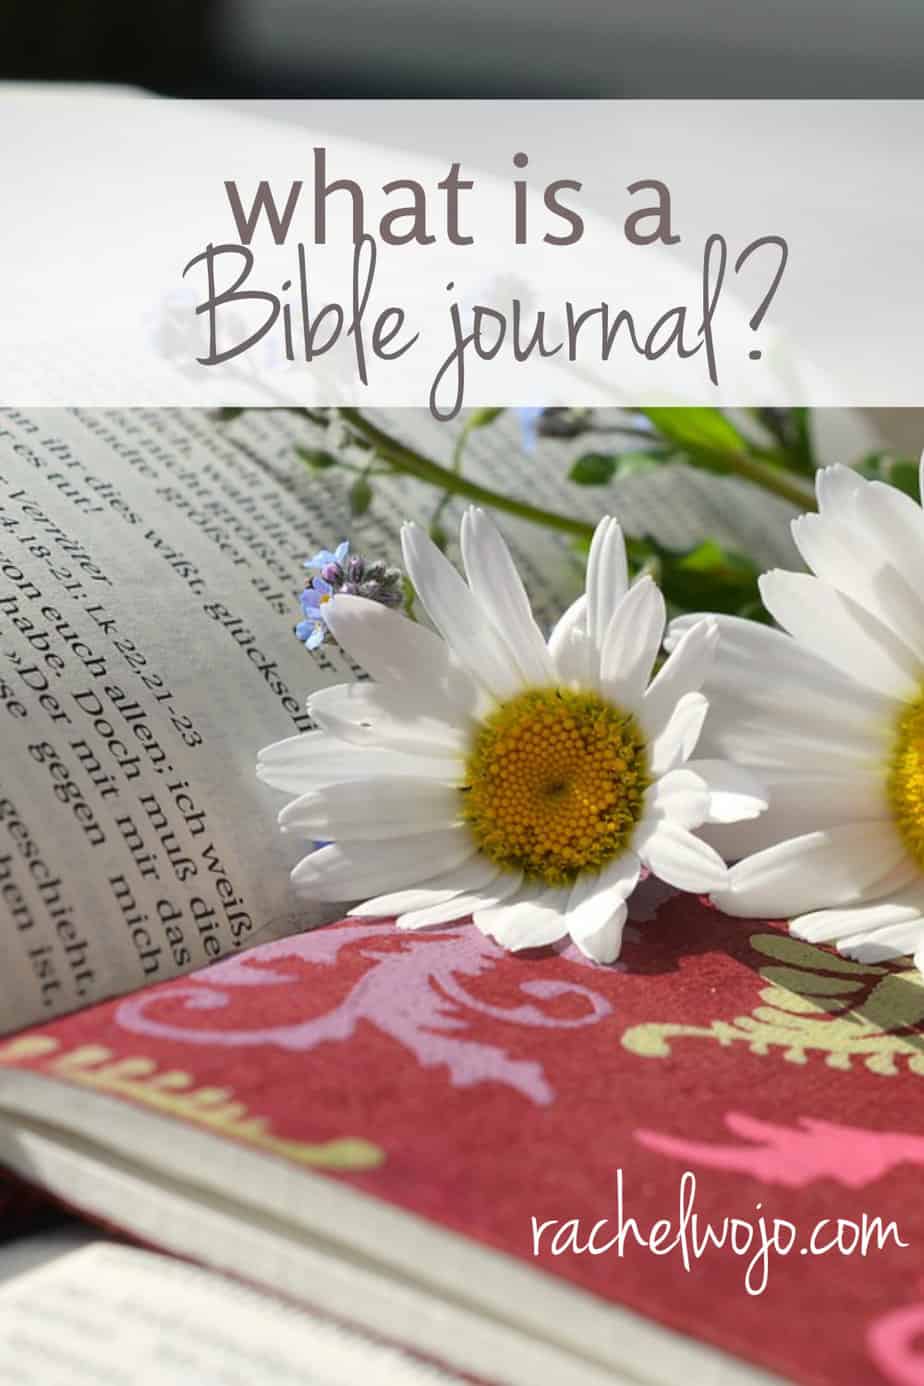 https://rachelwojo.com/wp-content/uploads/2015/05/bible-journal.jpg